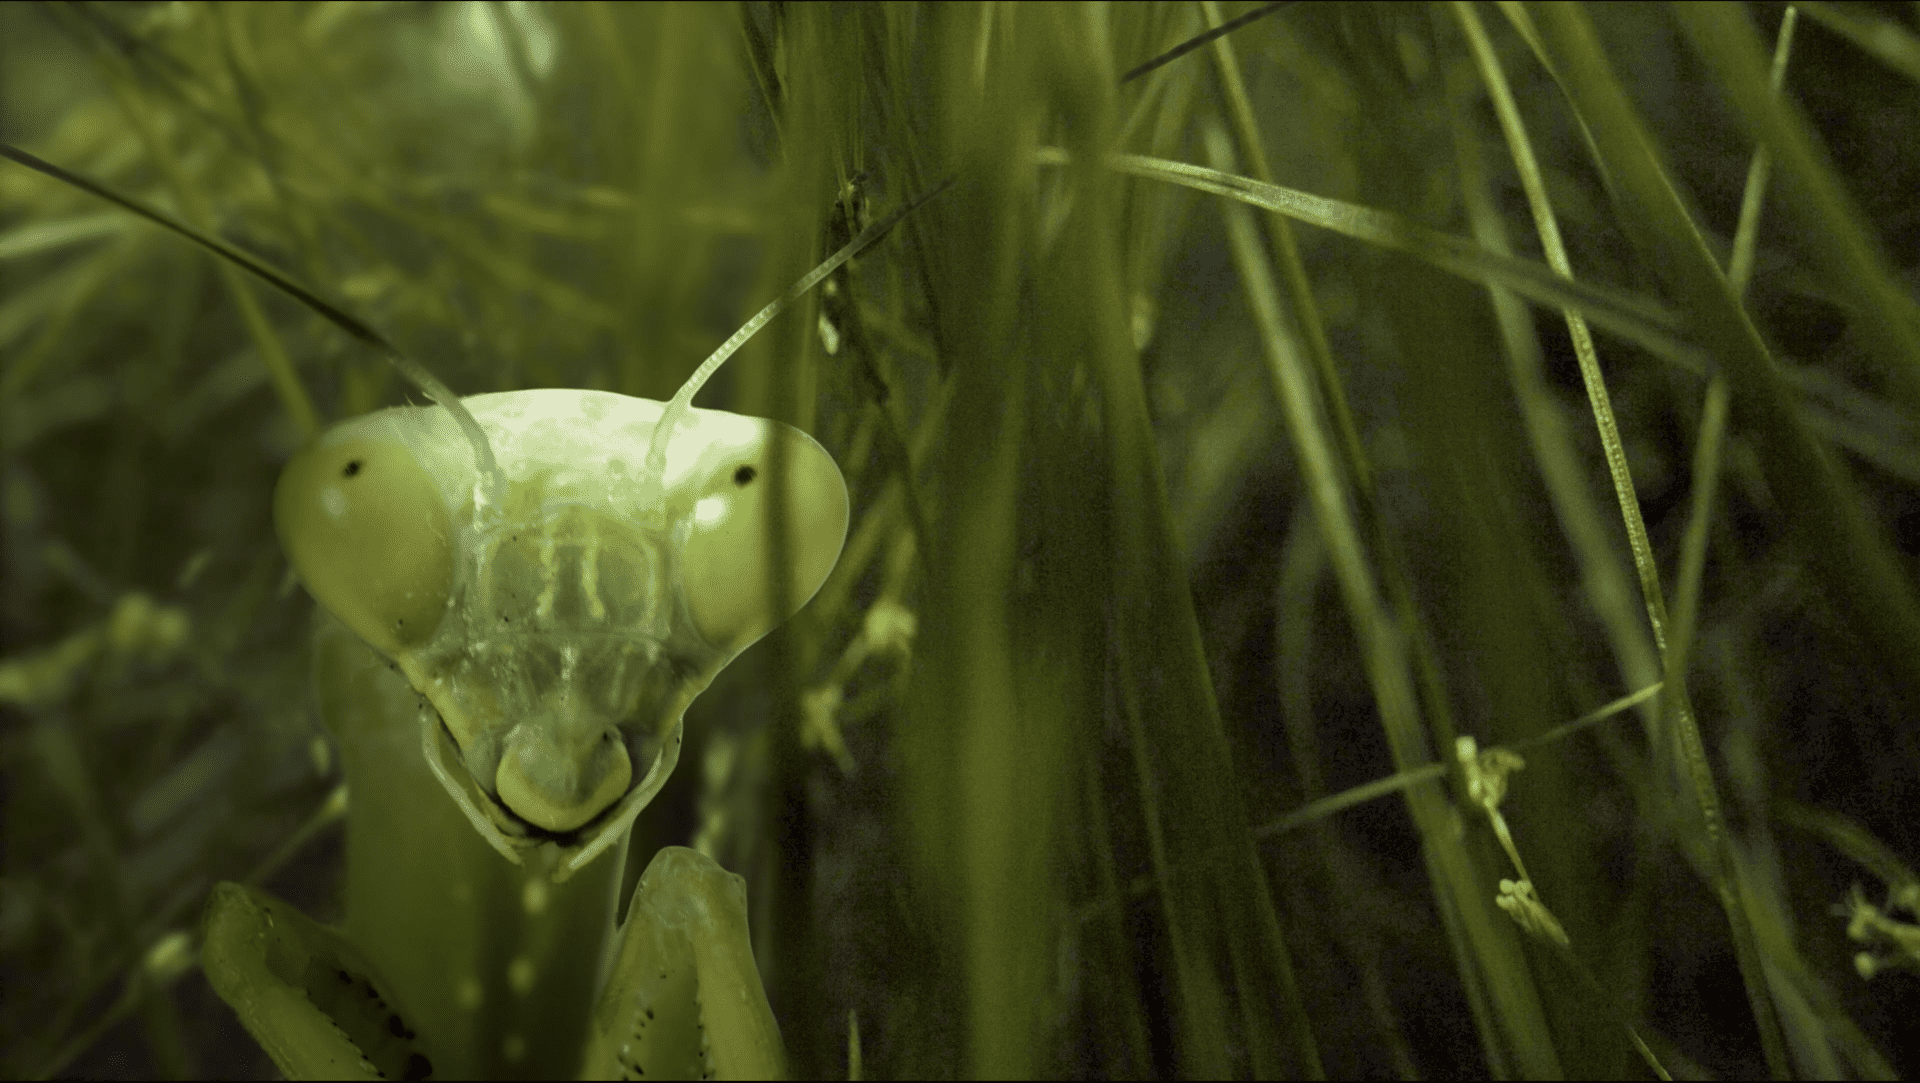 Macro image of grasshopper, still image from Field Companion videos